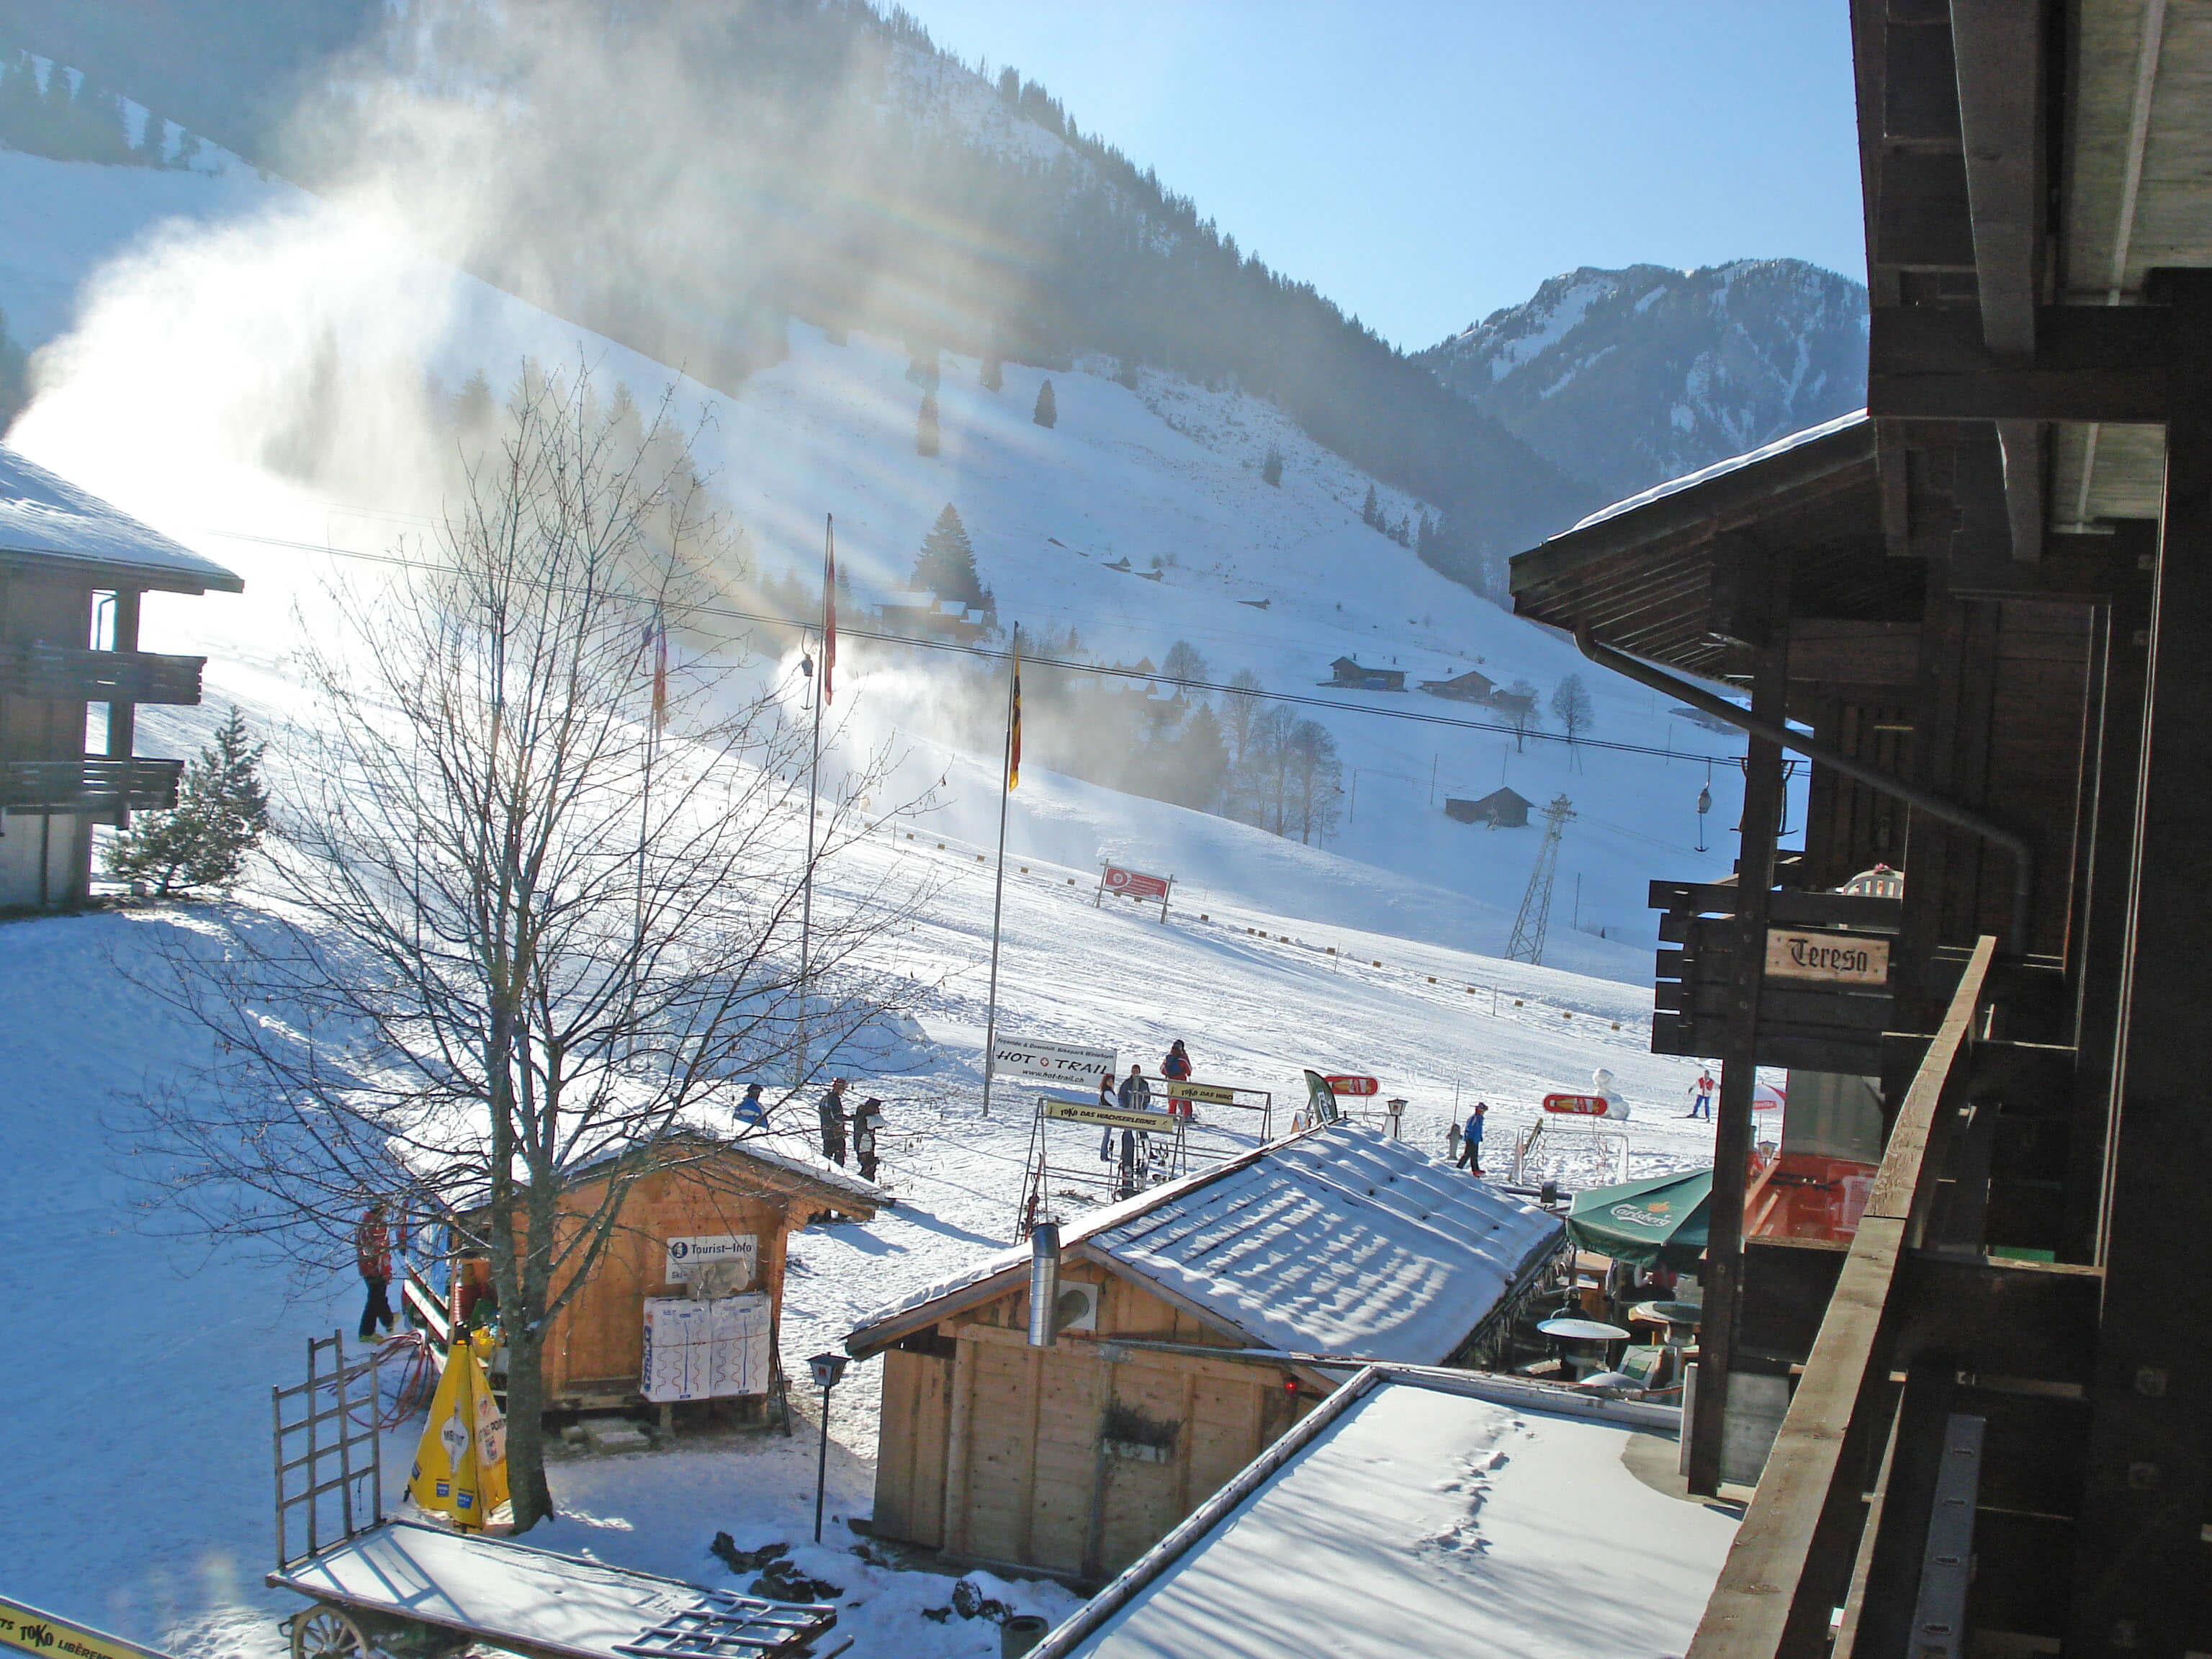 View of the ski slope in winter